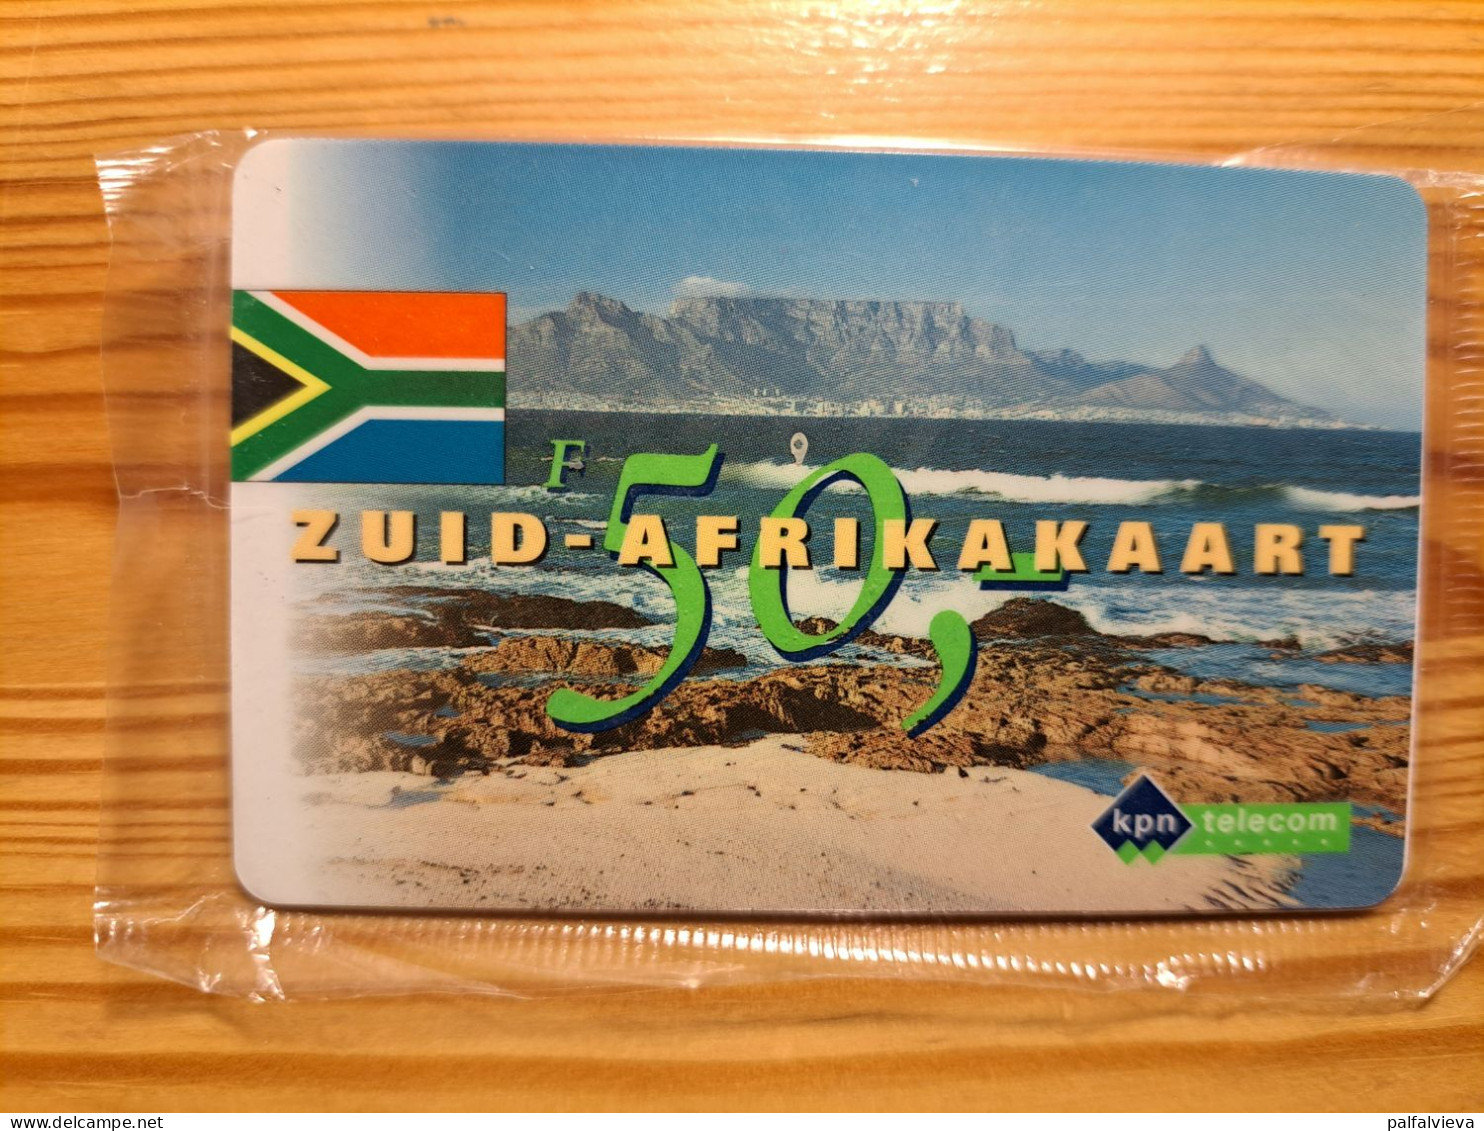 Prepaid Phonecard Netherlands, Kpn Telecom - Zuid-Afrikakaart, South Africa - Mint In Blister - Cartes GSM, Prépayées Et Recharges